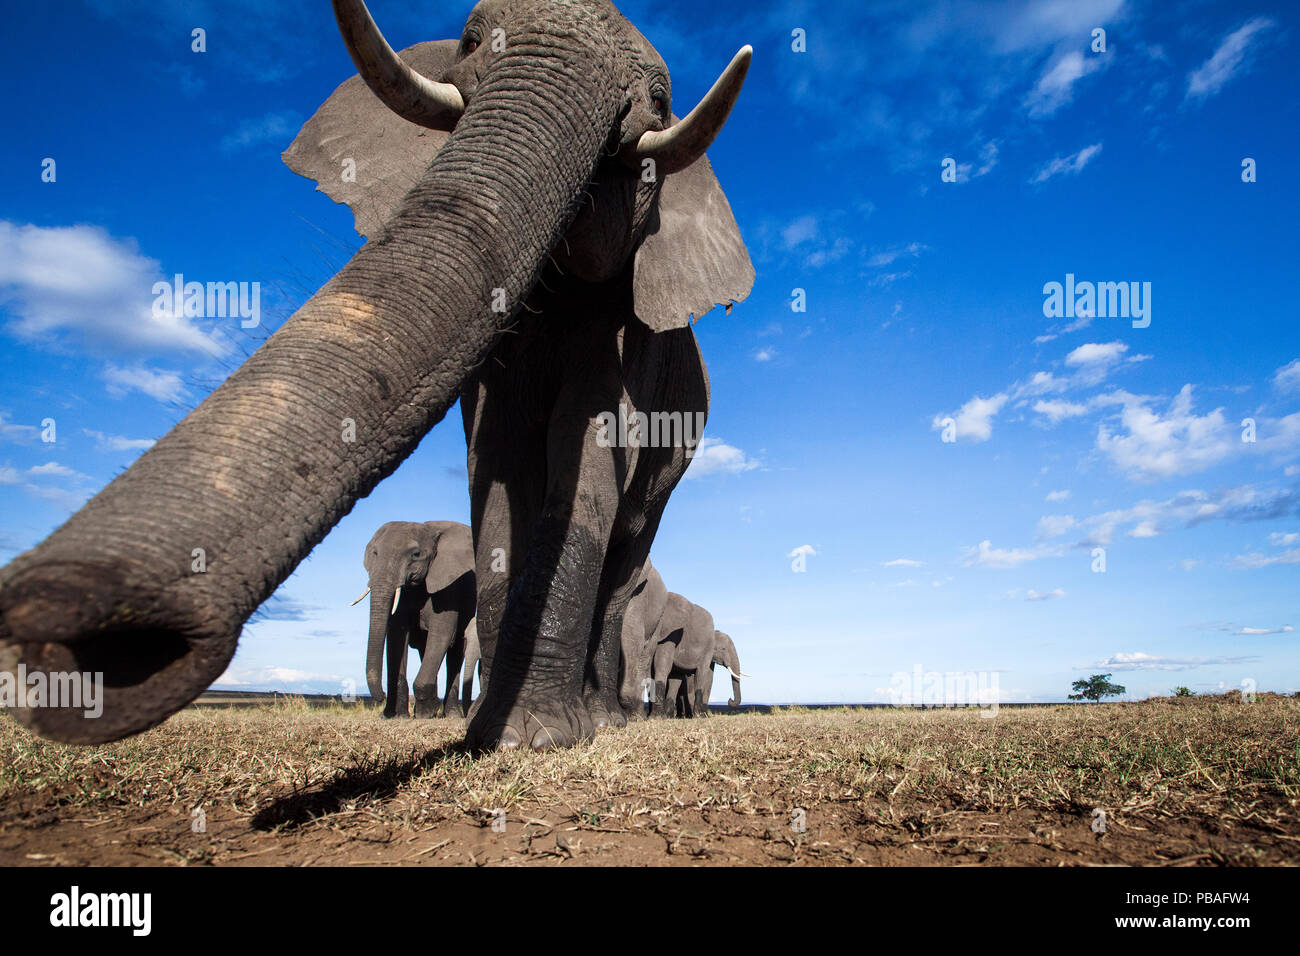 Afrikanischer Elefant (Loxodonta africana) Fernerkundung mit der Trunk-Remote Camera Perspektive. Masai Mara National Reserve, Kenia. Stockfoto